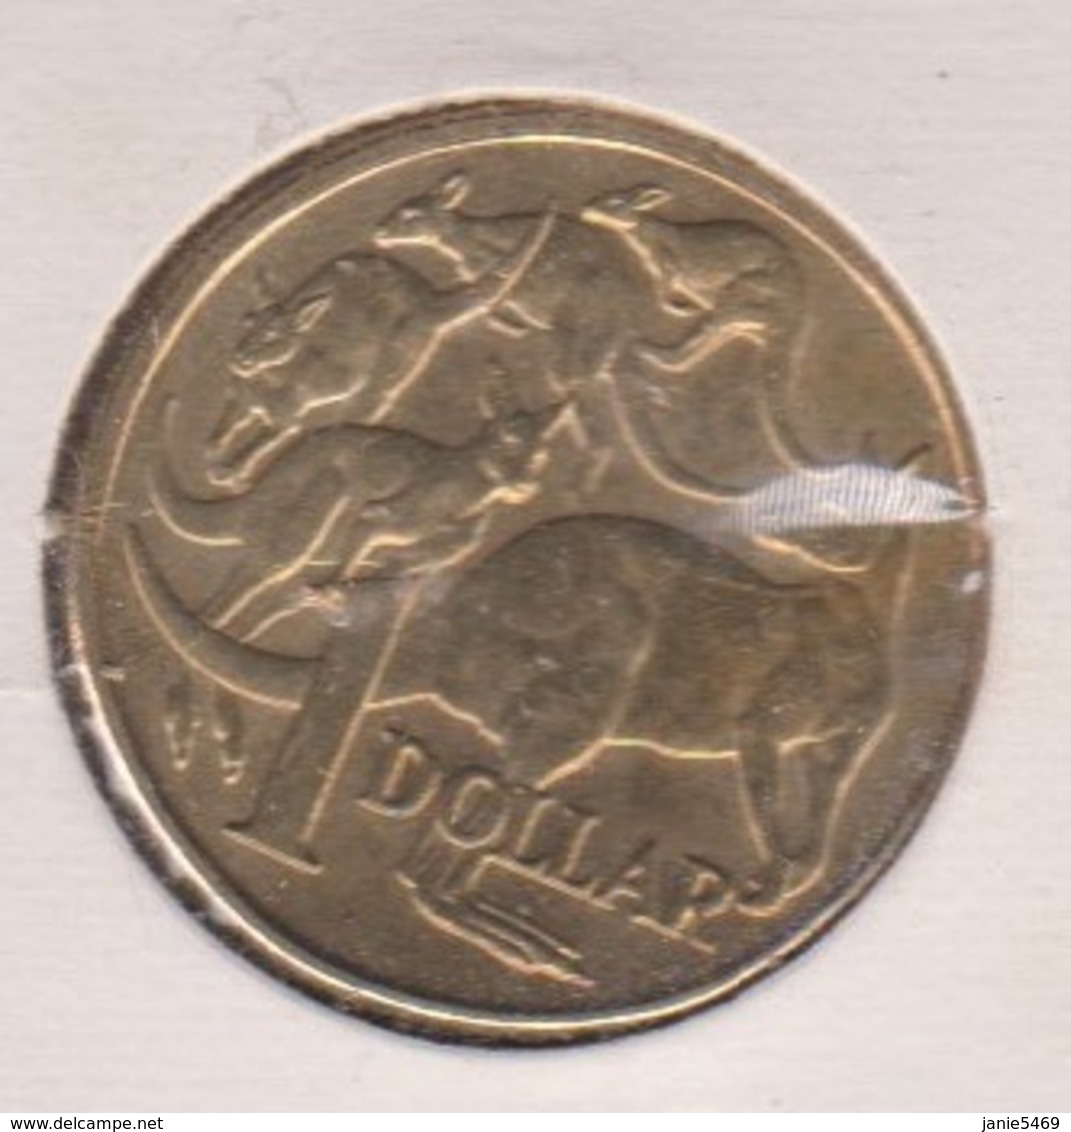 Australia 2017 Queen Elizabeth II $ 1.00 Coin - Dollar